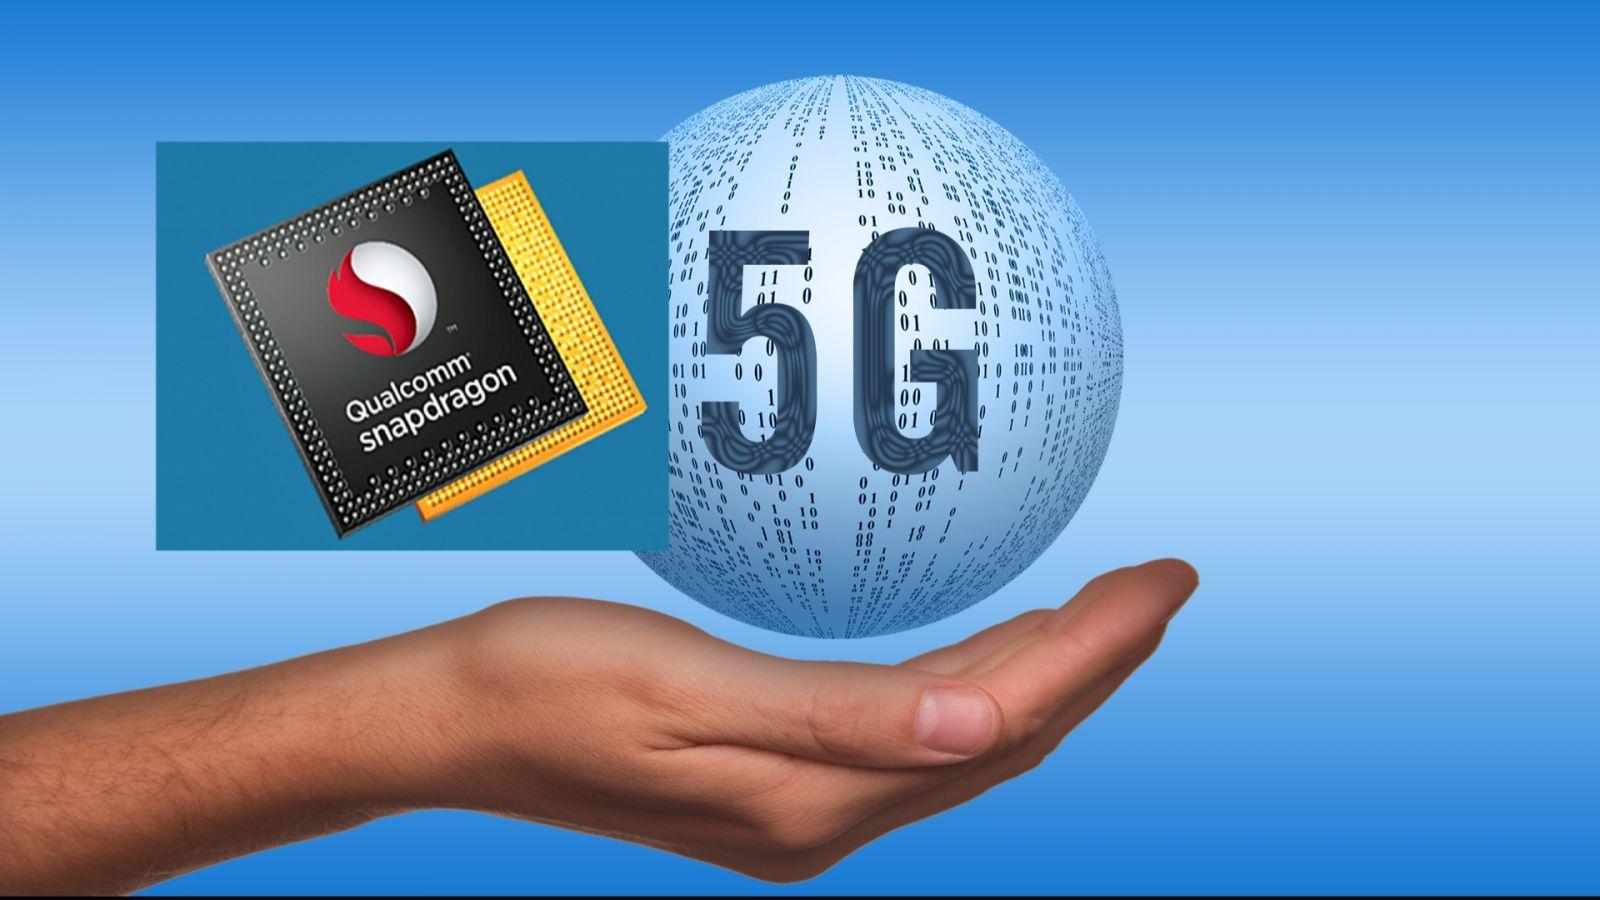 5G Qualcomm Logo - Qualcomm starts 5G war with new modem | Digital News Asia